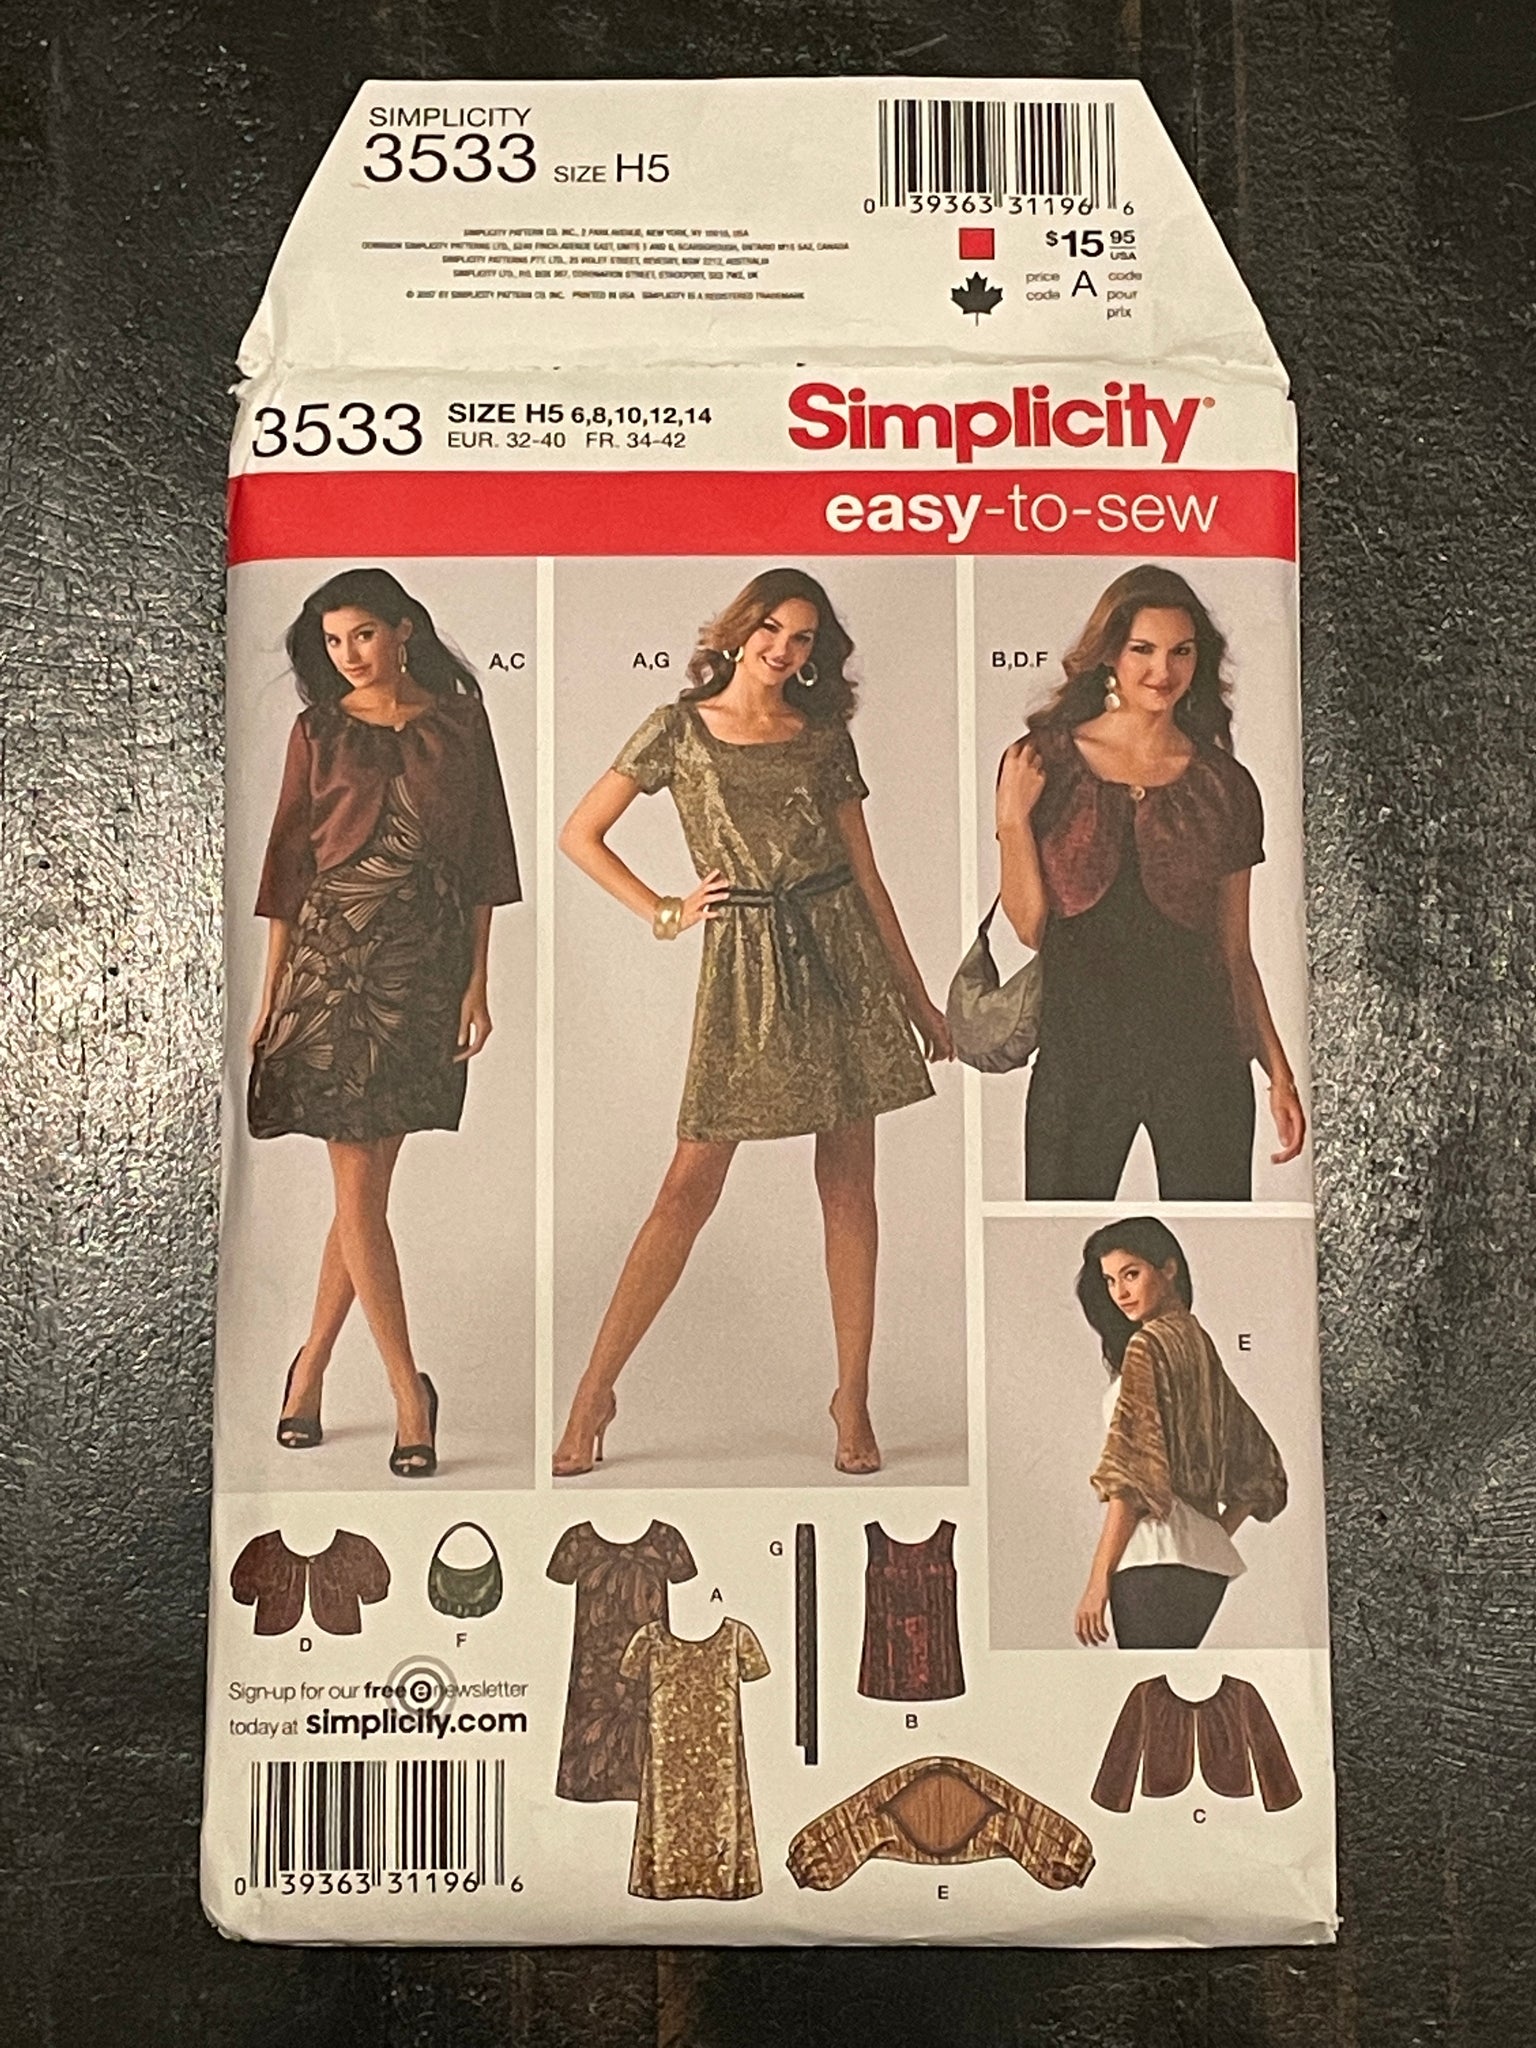 2007 Simplicity 3533 Pattern - Dress, Top, Jacket, Shrug, Bag and Belt FACTORY FOLDED